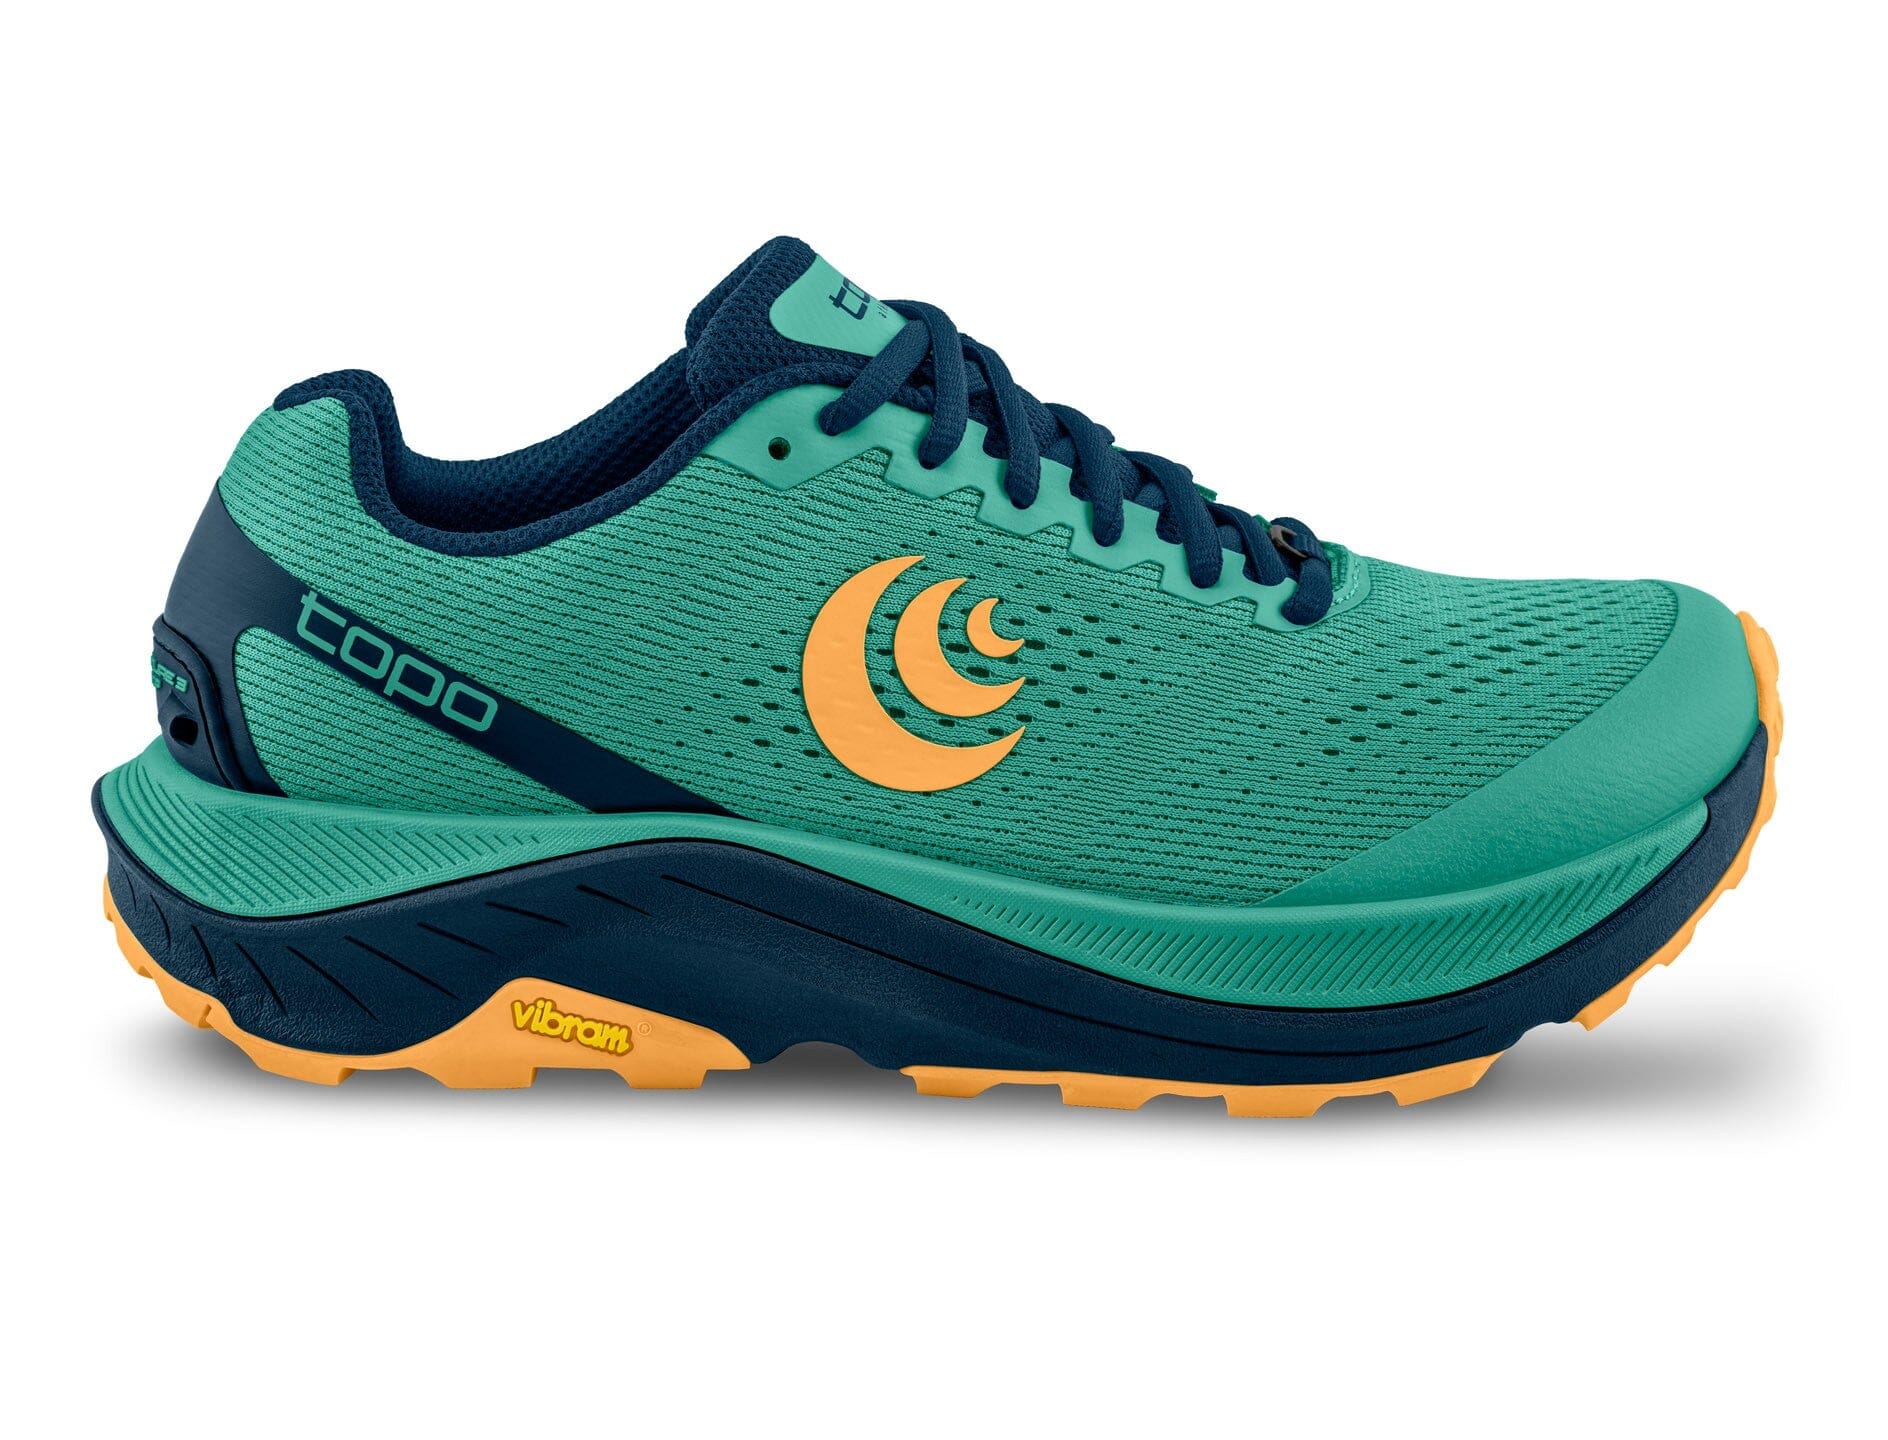 Topo Women's Ultraventure 3 Trail Running Shoes Teal/Orange US 6.5 